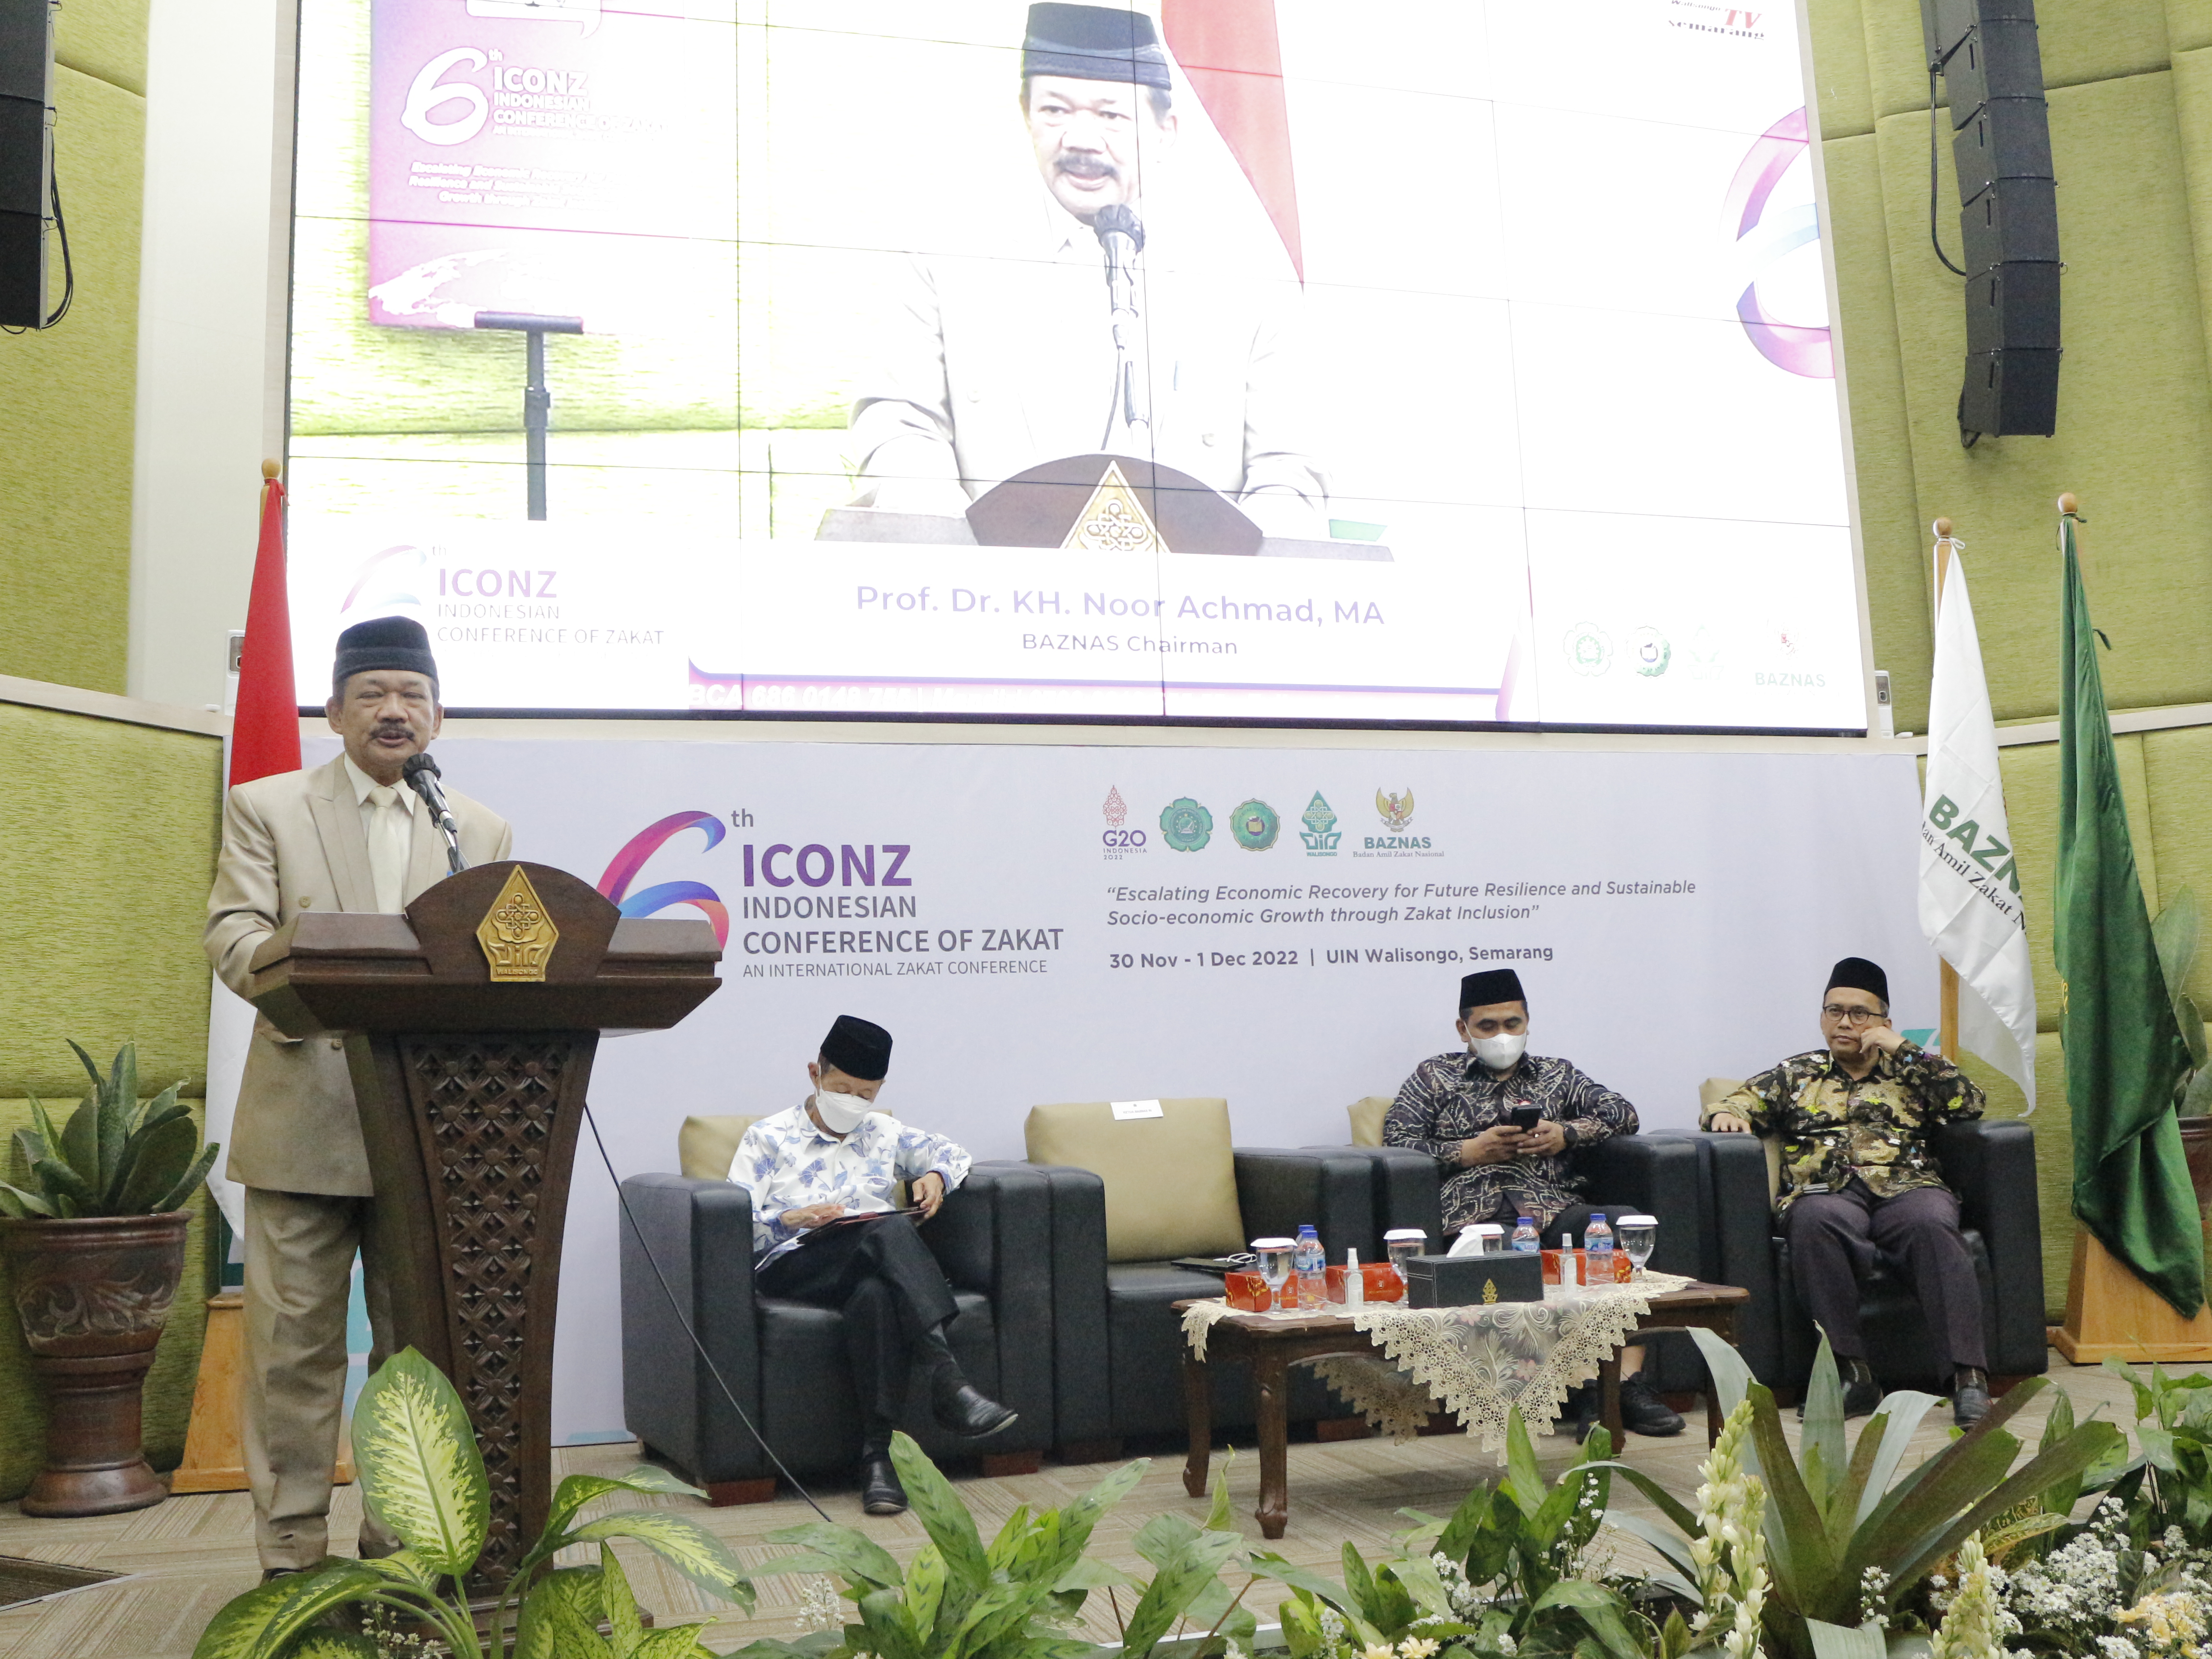 Indonesia Conference of Zakat ICONZ 6 di UIN Walisongo, Sumbangan Pengelolaan Zakat Indonesia untuk Dunia